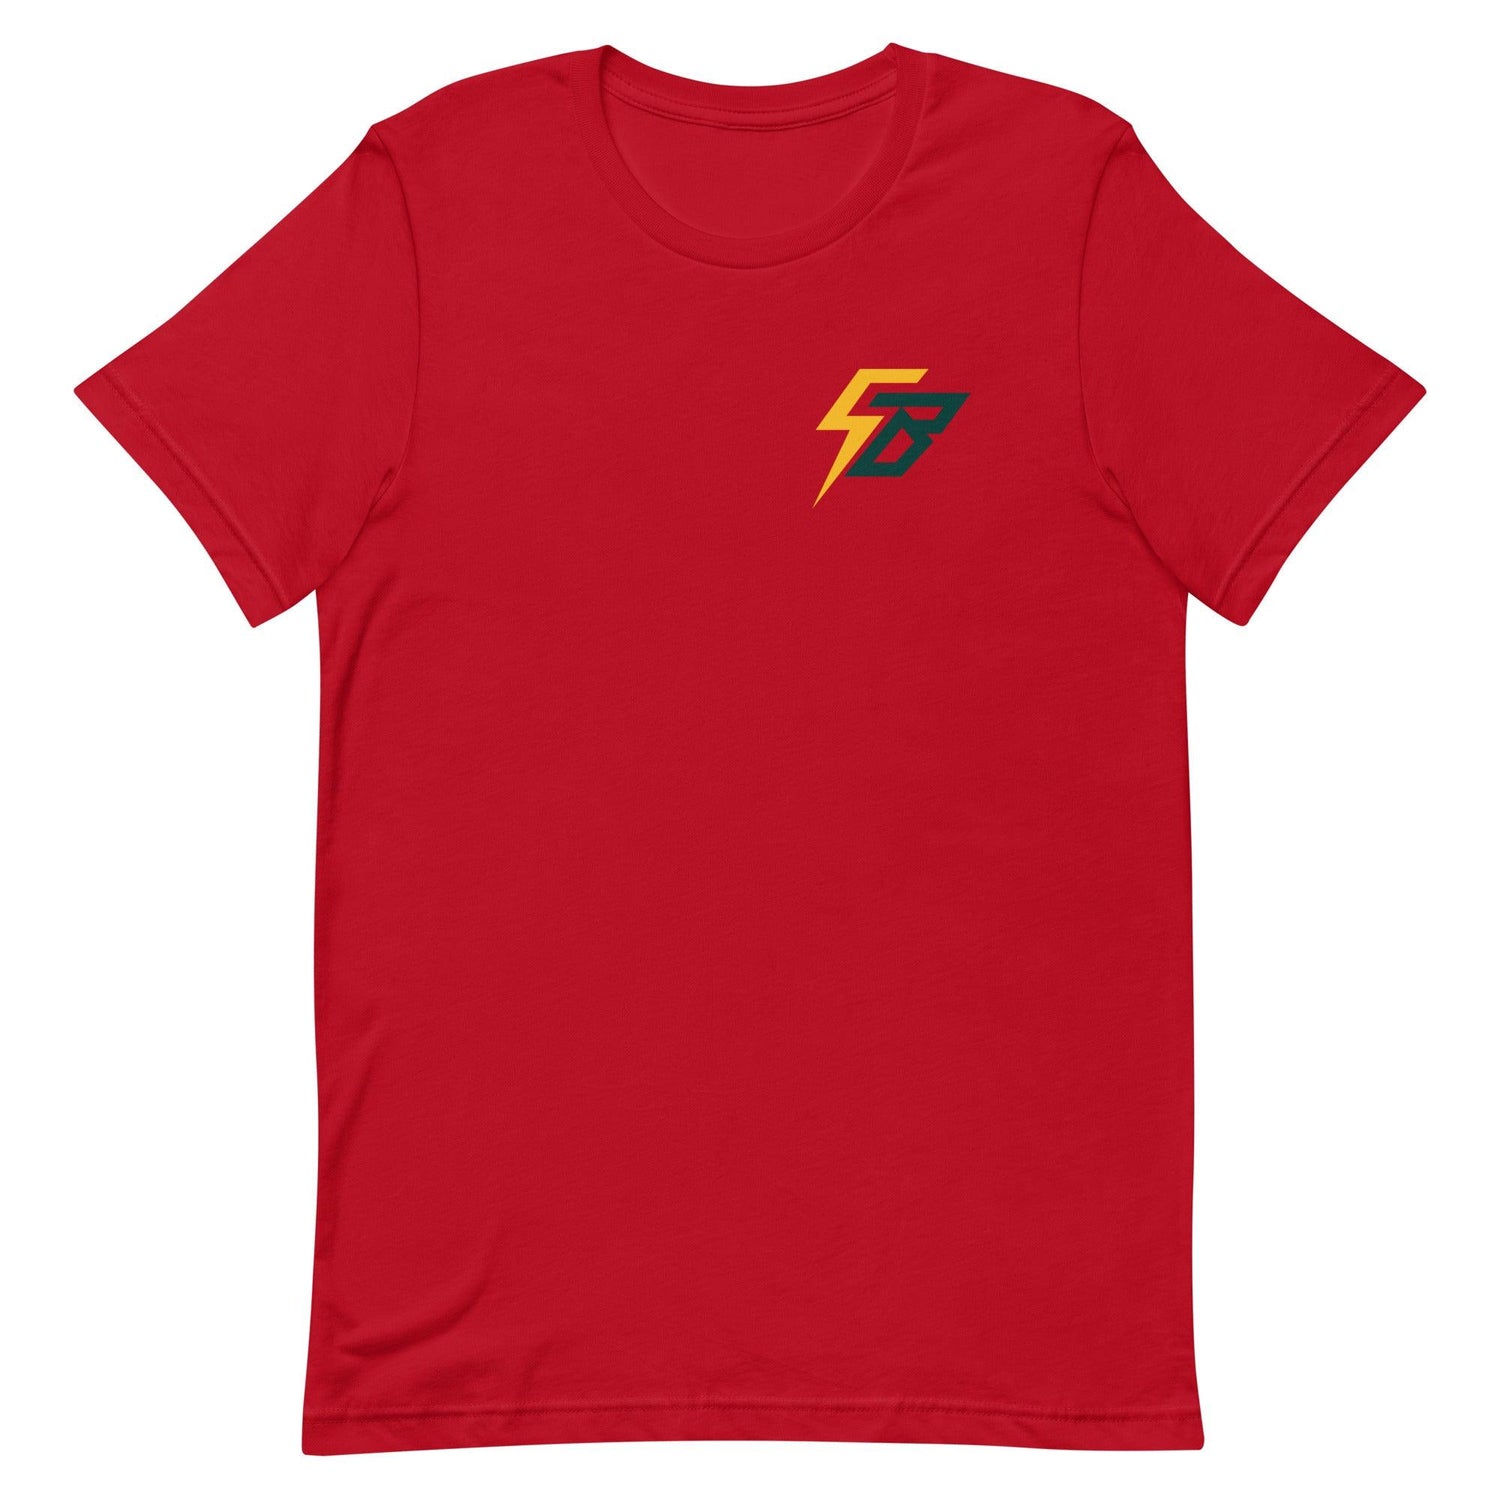 Skye Bolt "Electric" t-shirt - Fan Arch